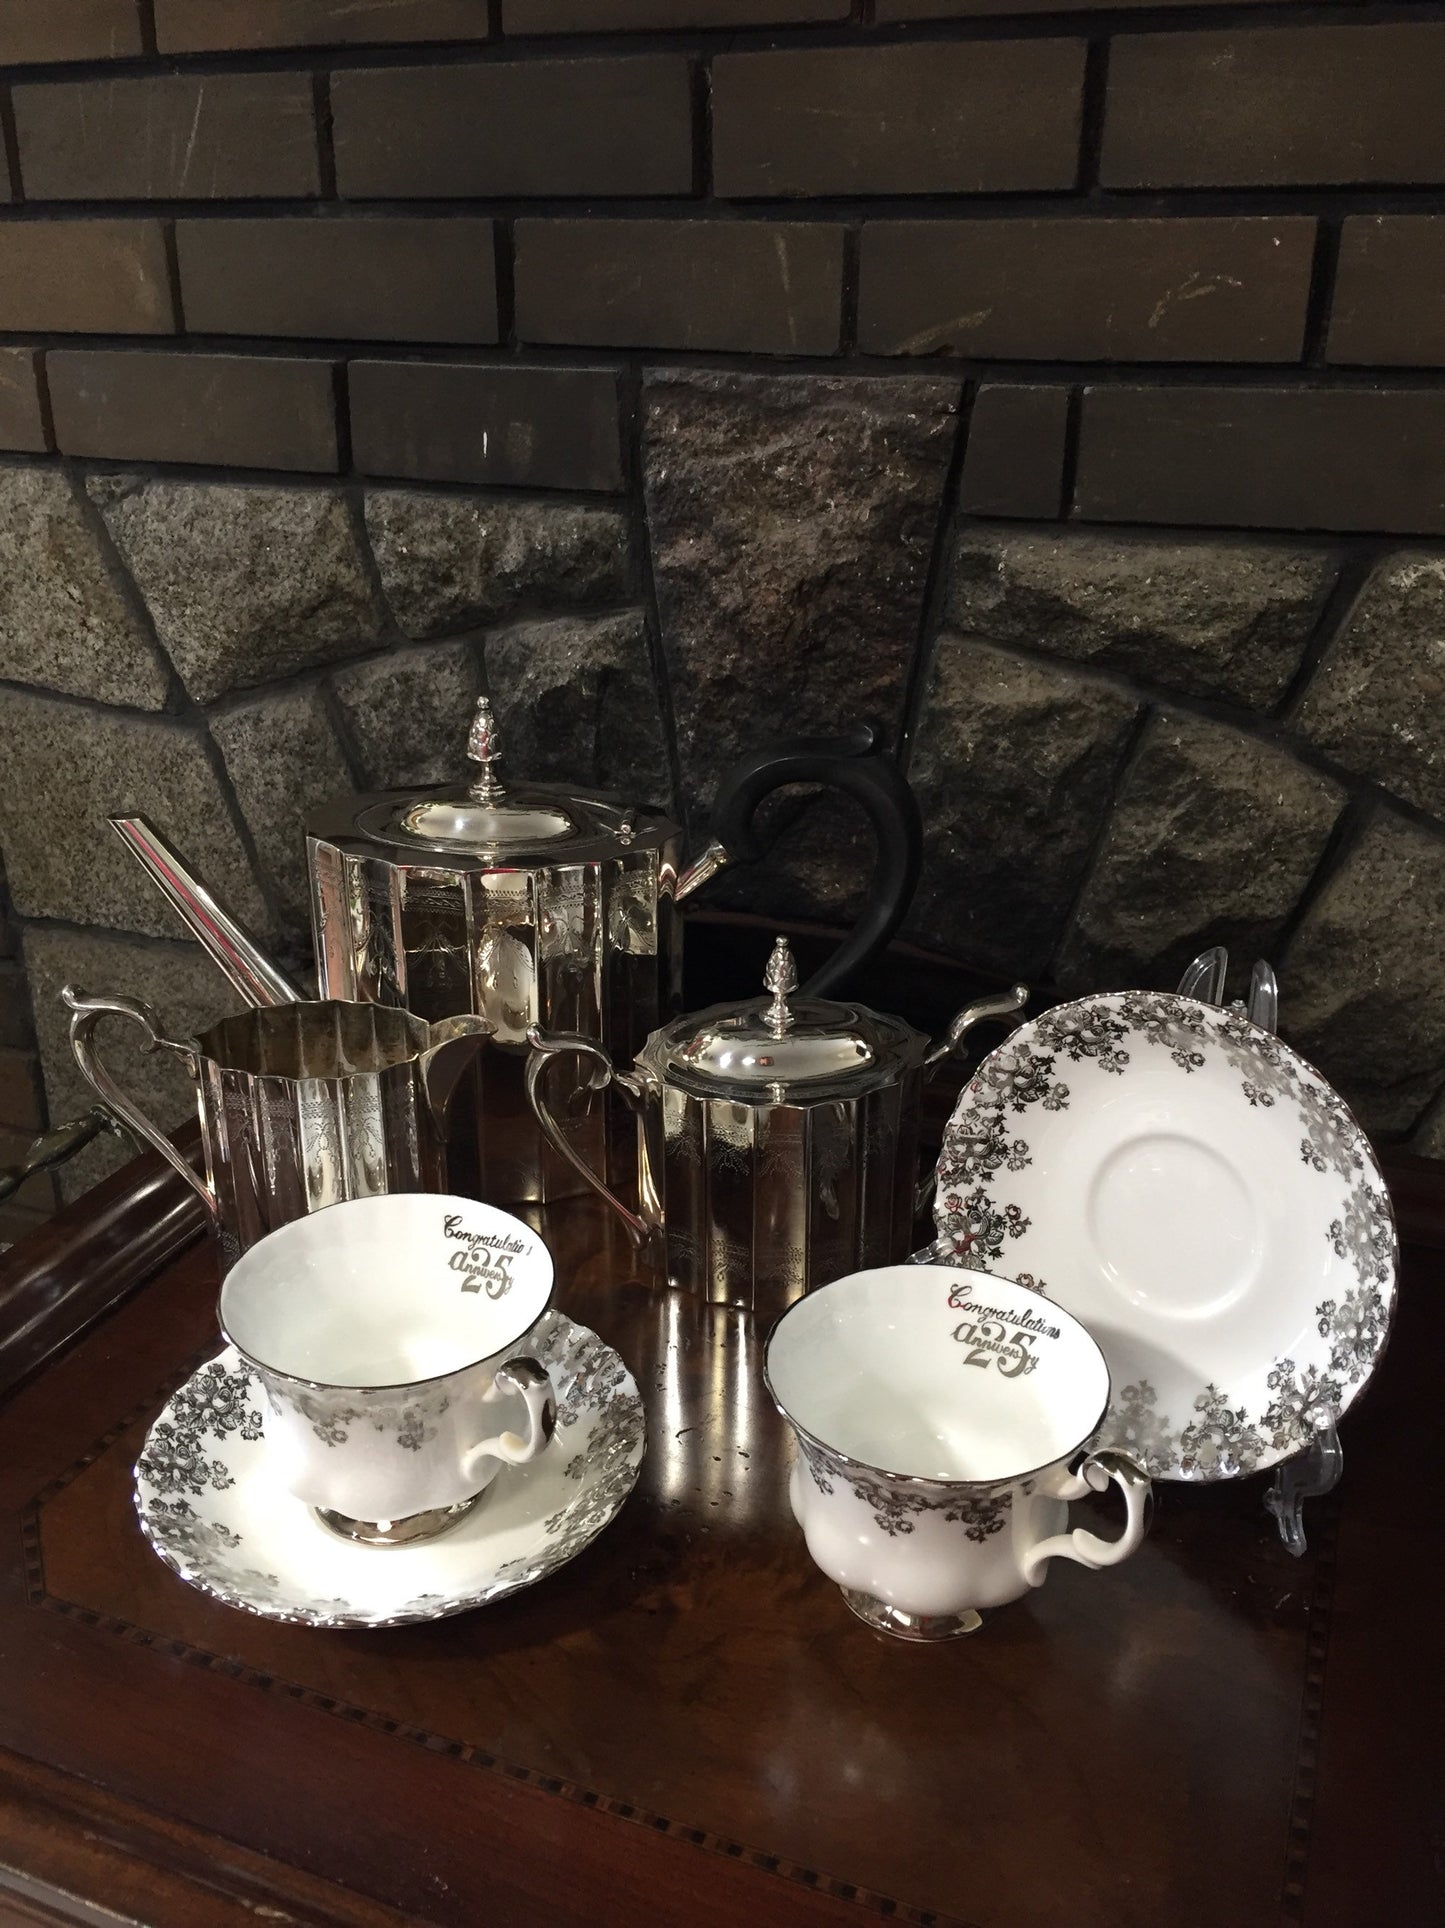 Royal Albert Silver Anniversary Teacups - Vintage Royal Albert Teacup and Saucer - Set of 2 Vintage Tea Cups - 25th Anniversary